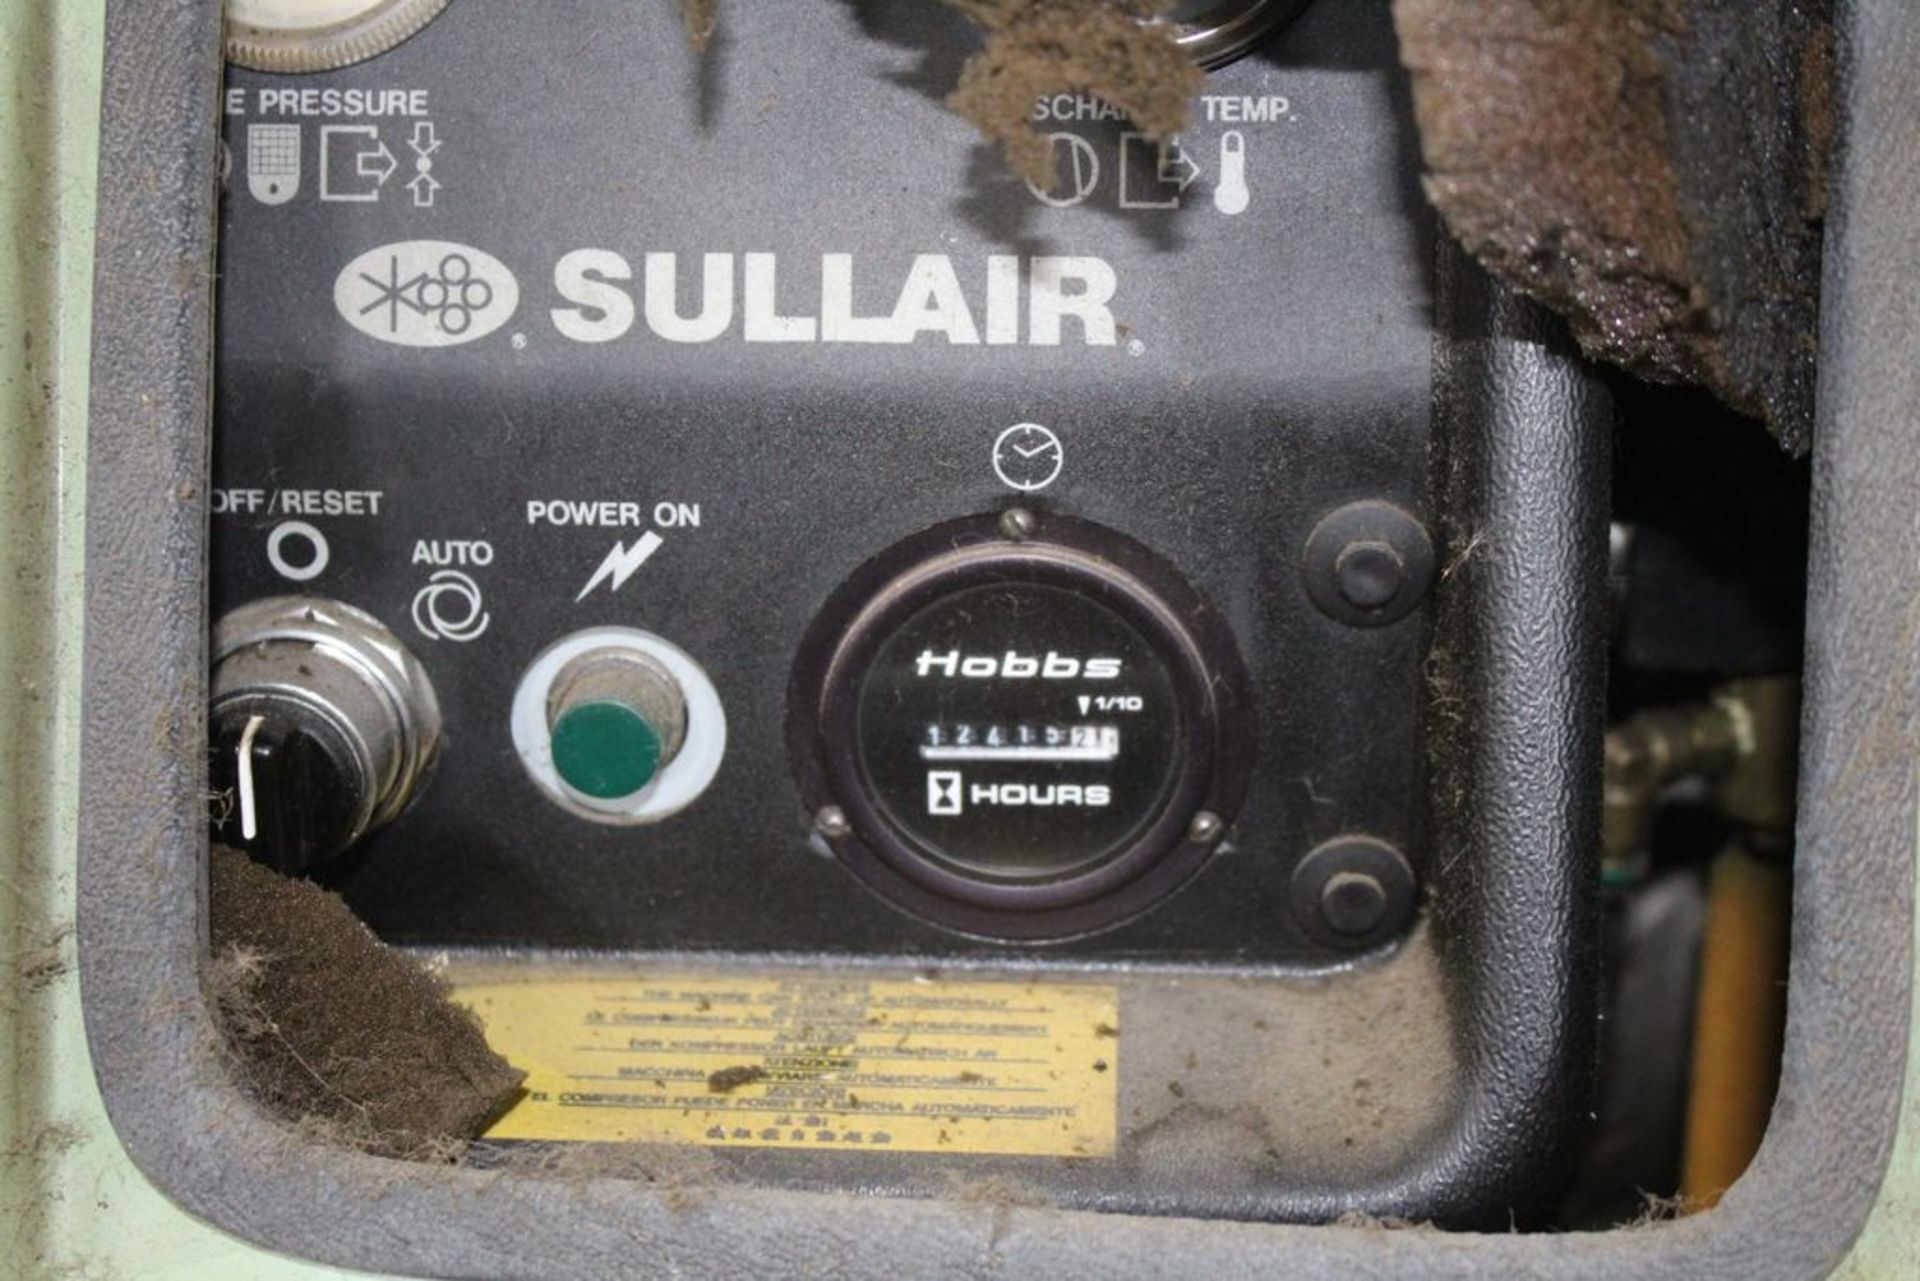 SULLAIR ES-6 AIR COMPRESSOR, 12,415 HOURS - Image 2 of 2